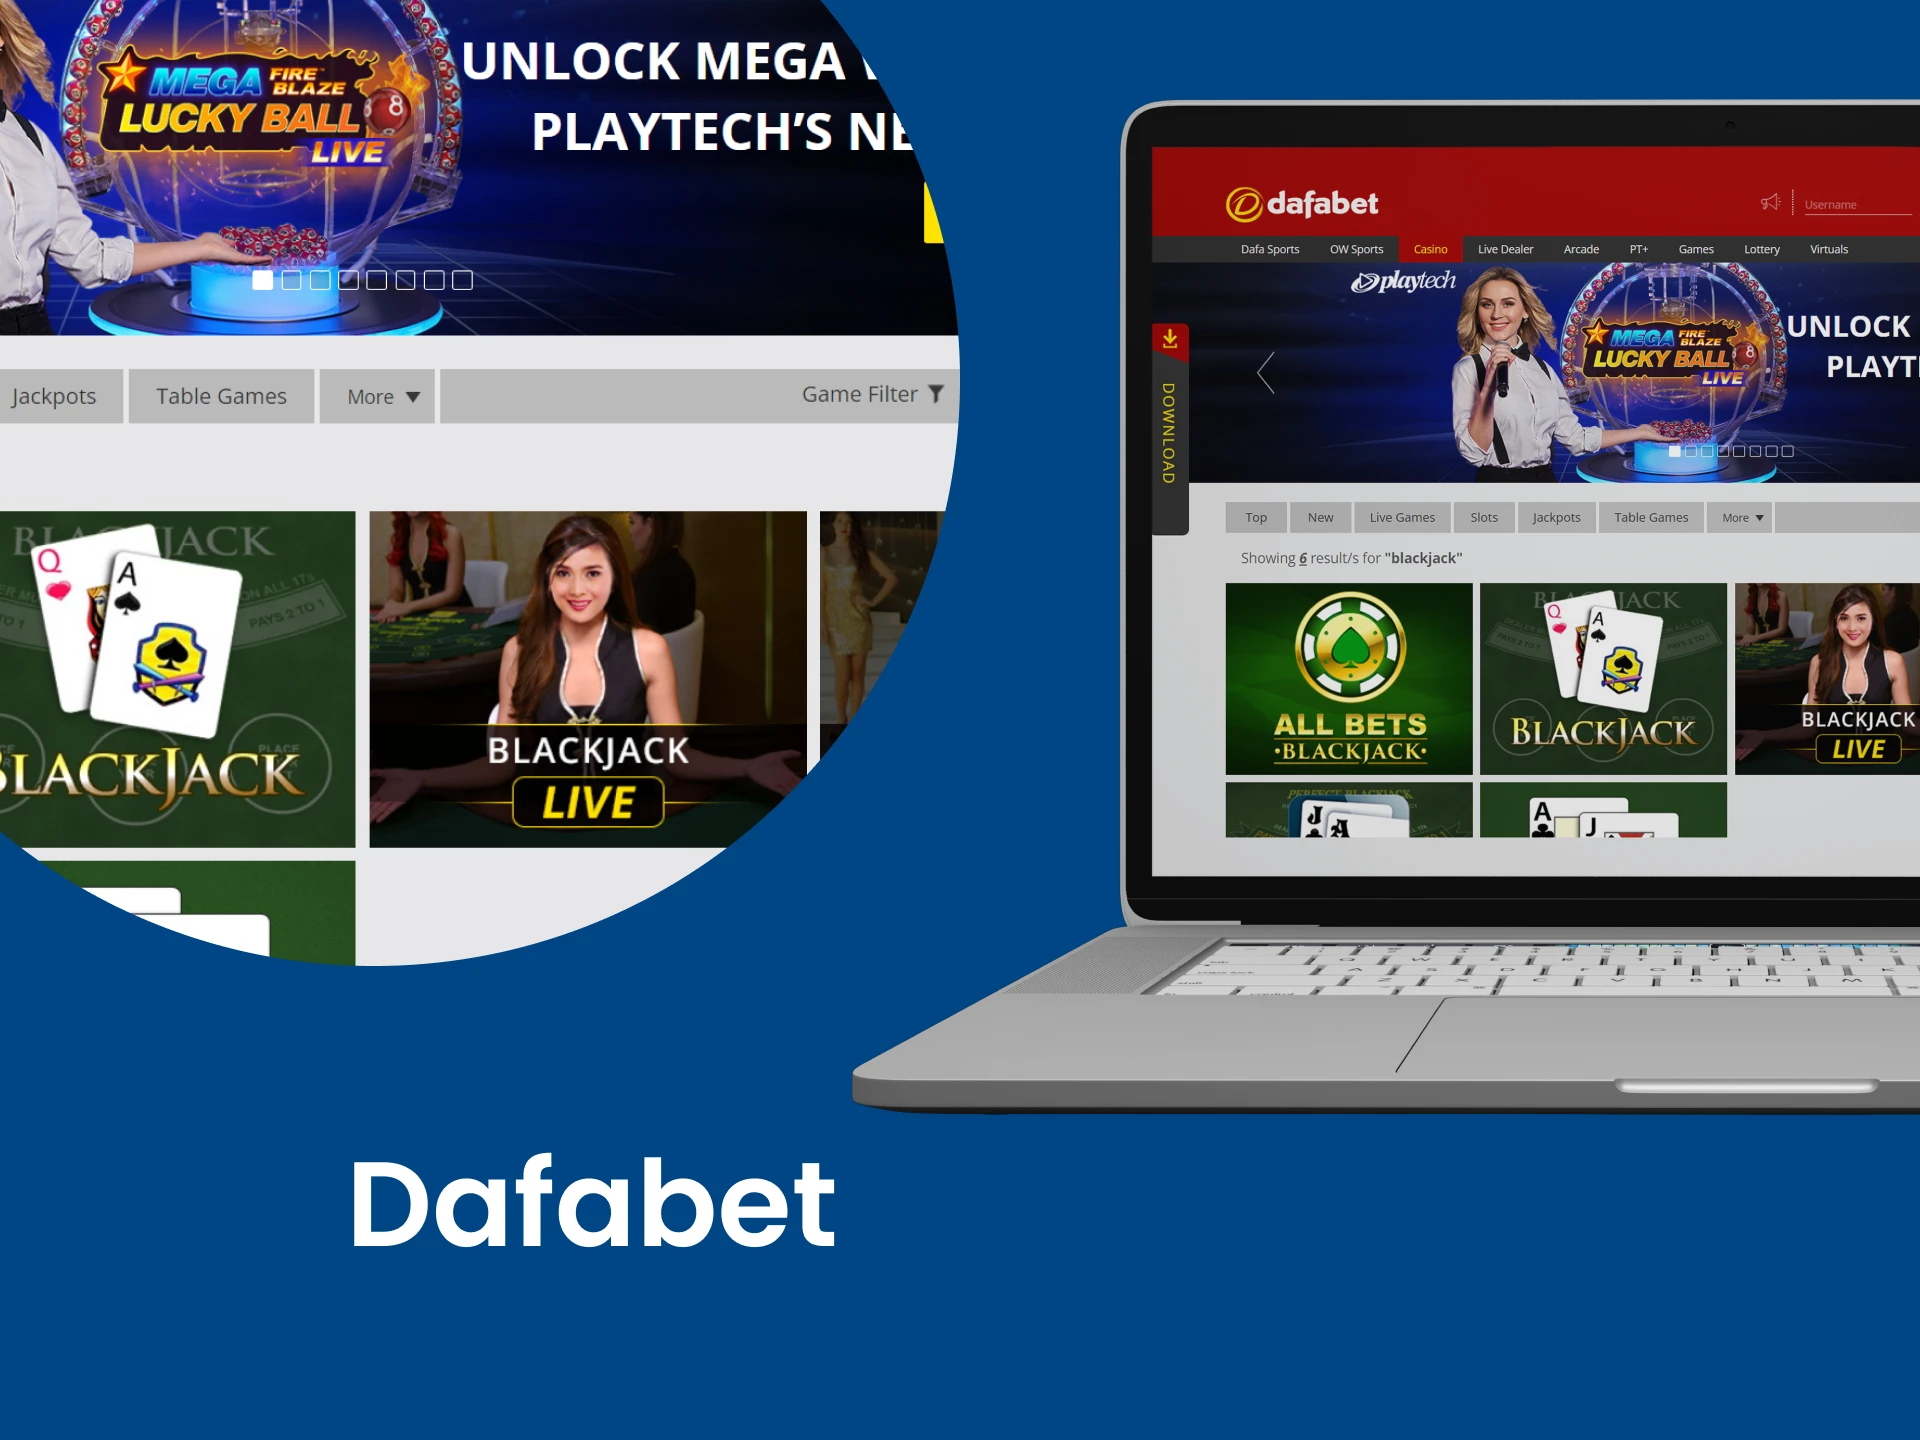 For blackjack games, choose Dafabet casino.